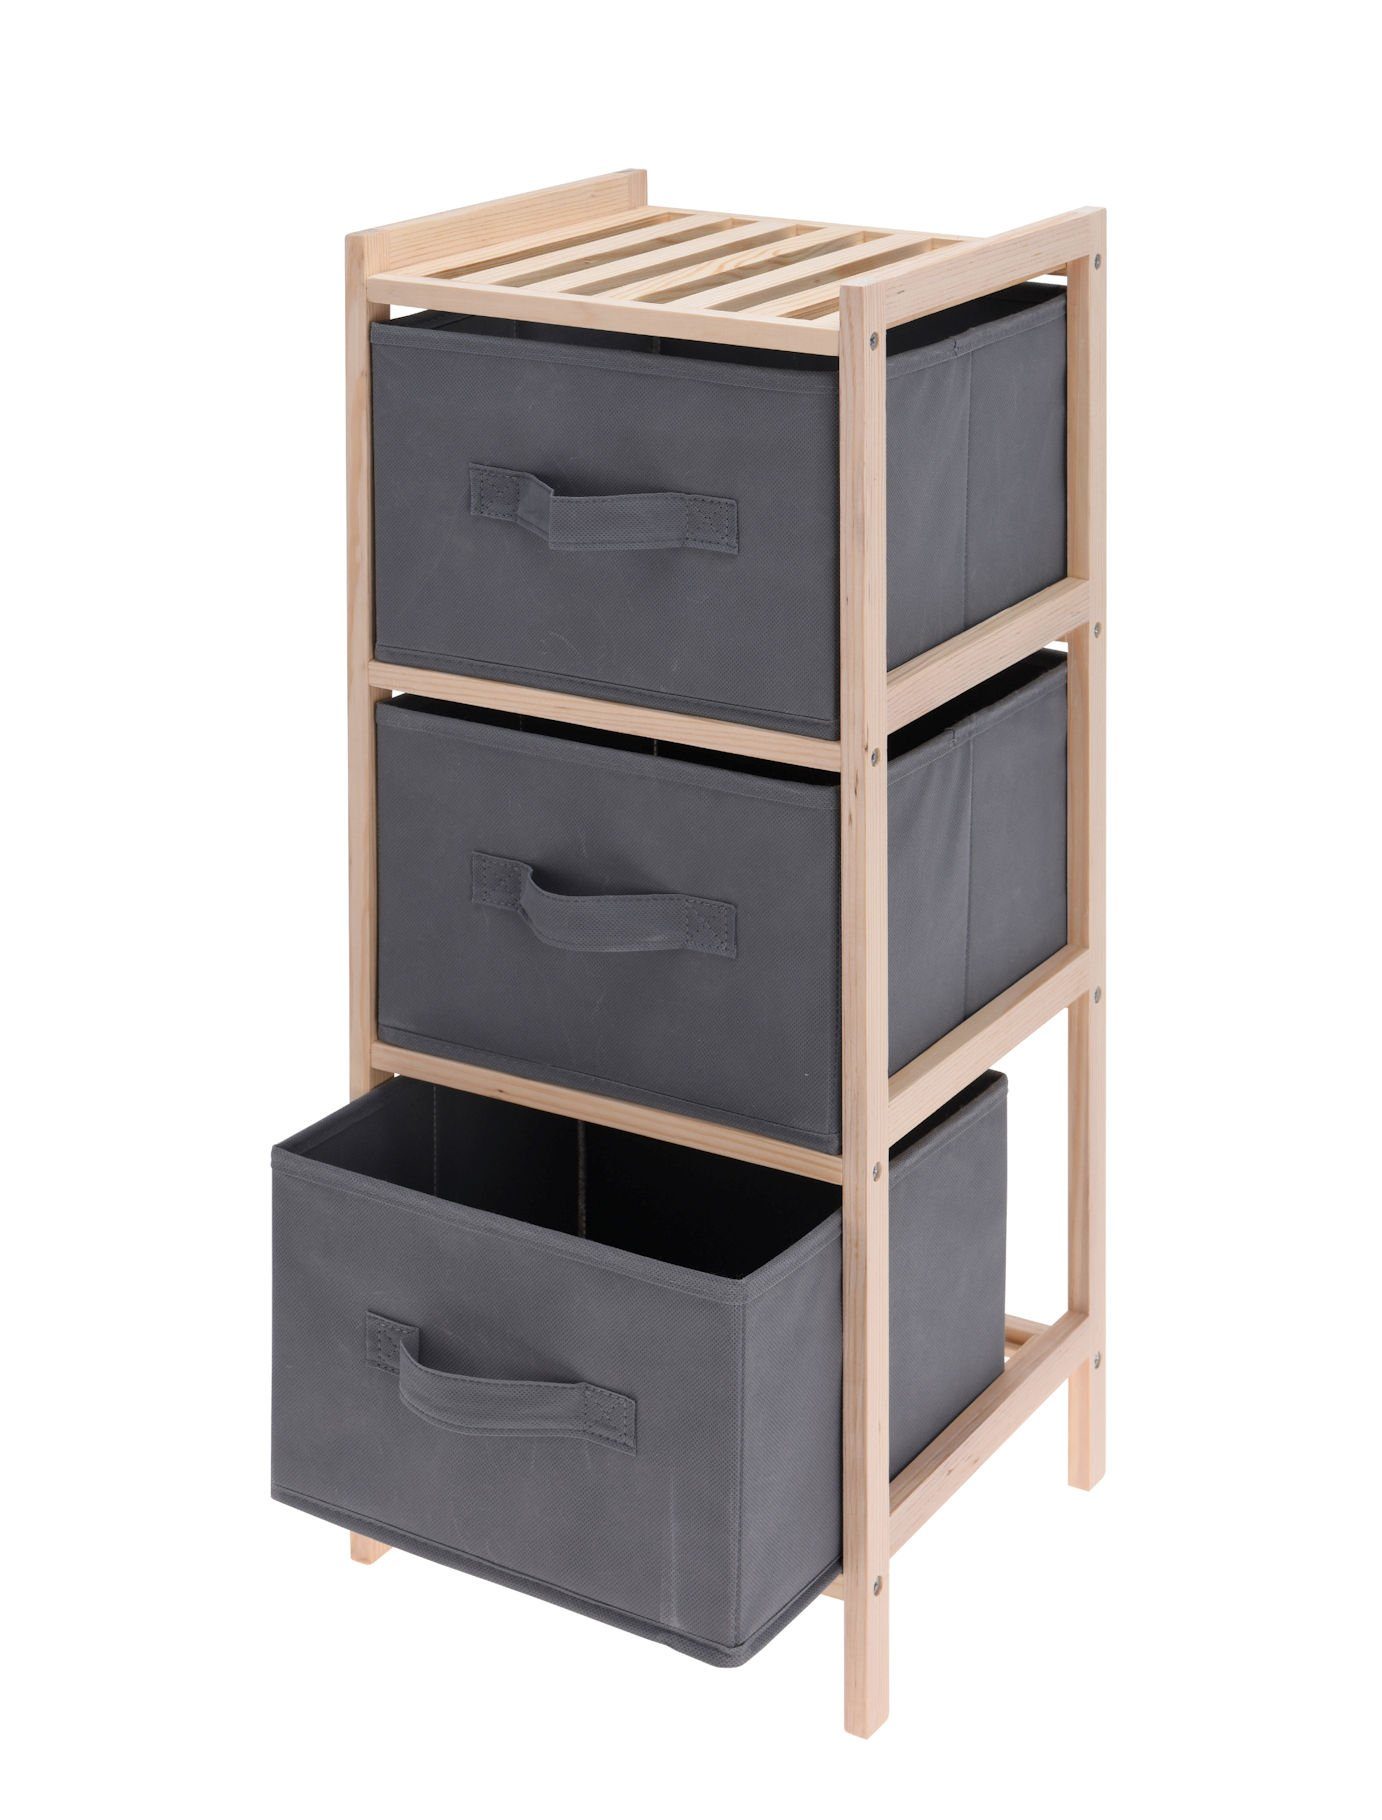 Spetebo Standregal Holz Standregal mit 3 Schubladen - 65 x 27 cm, Holzregal mit 3 Vlies Kisten | Standregale